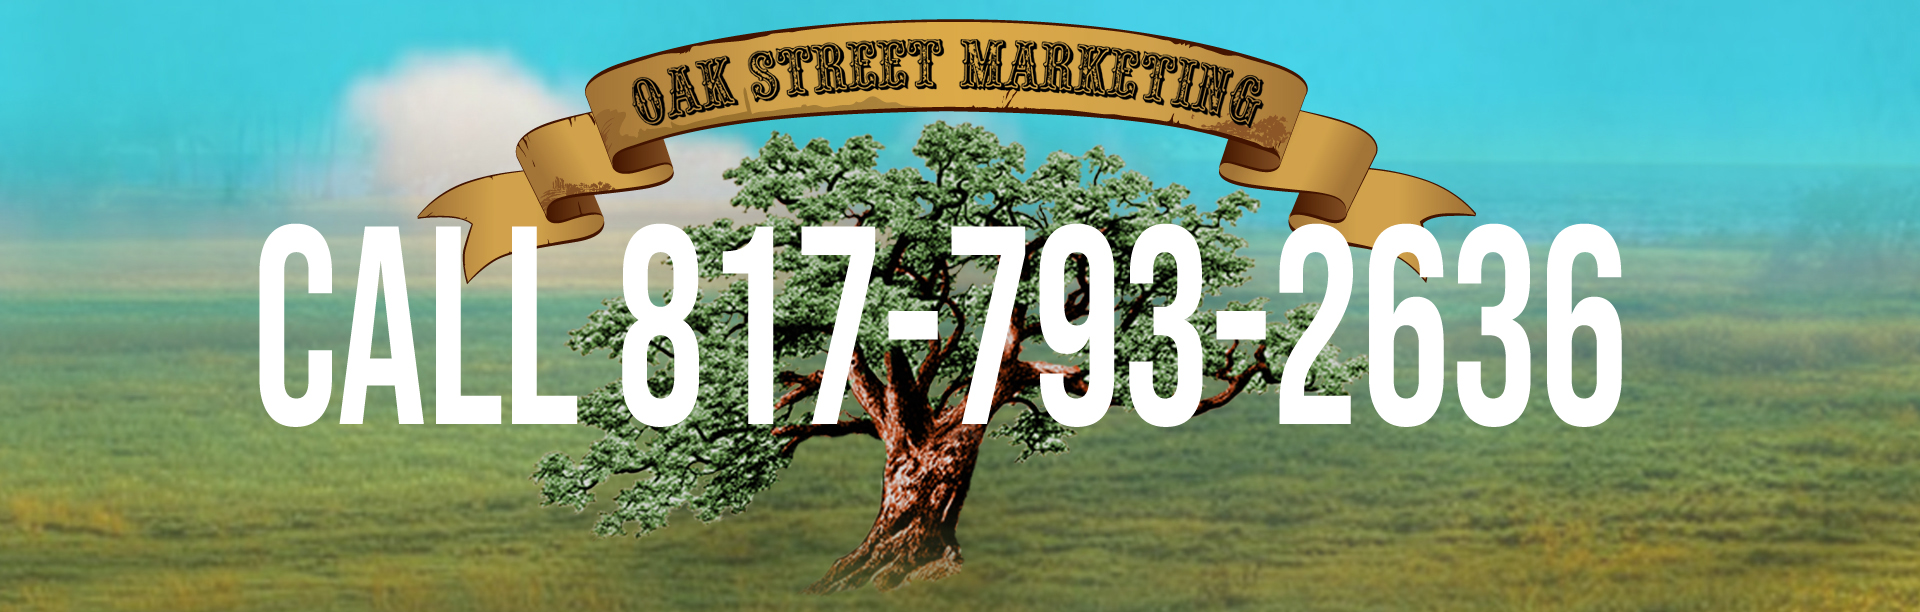 Oak Street Marketing Helps Small Businesses